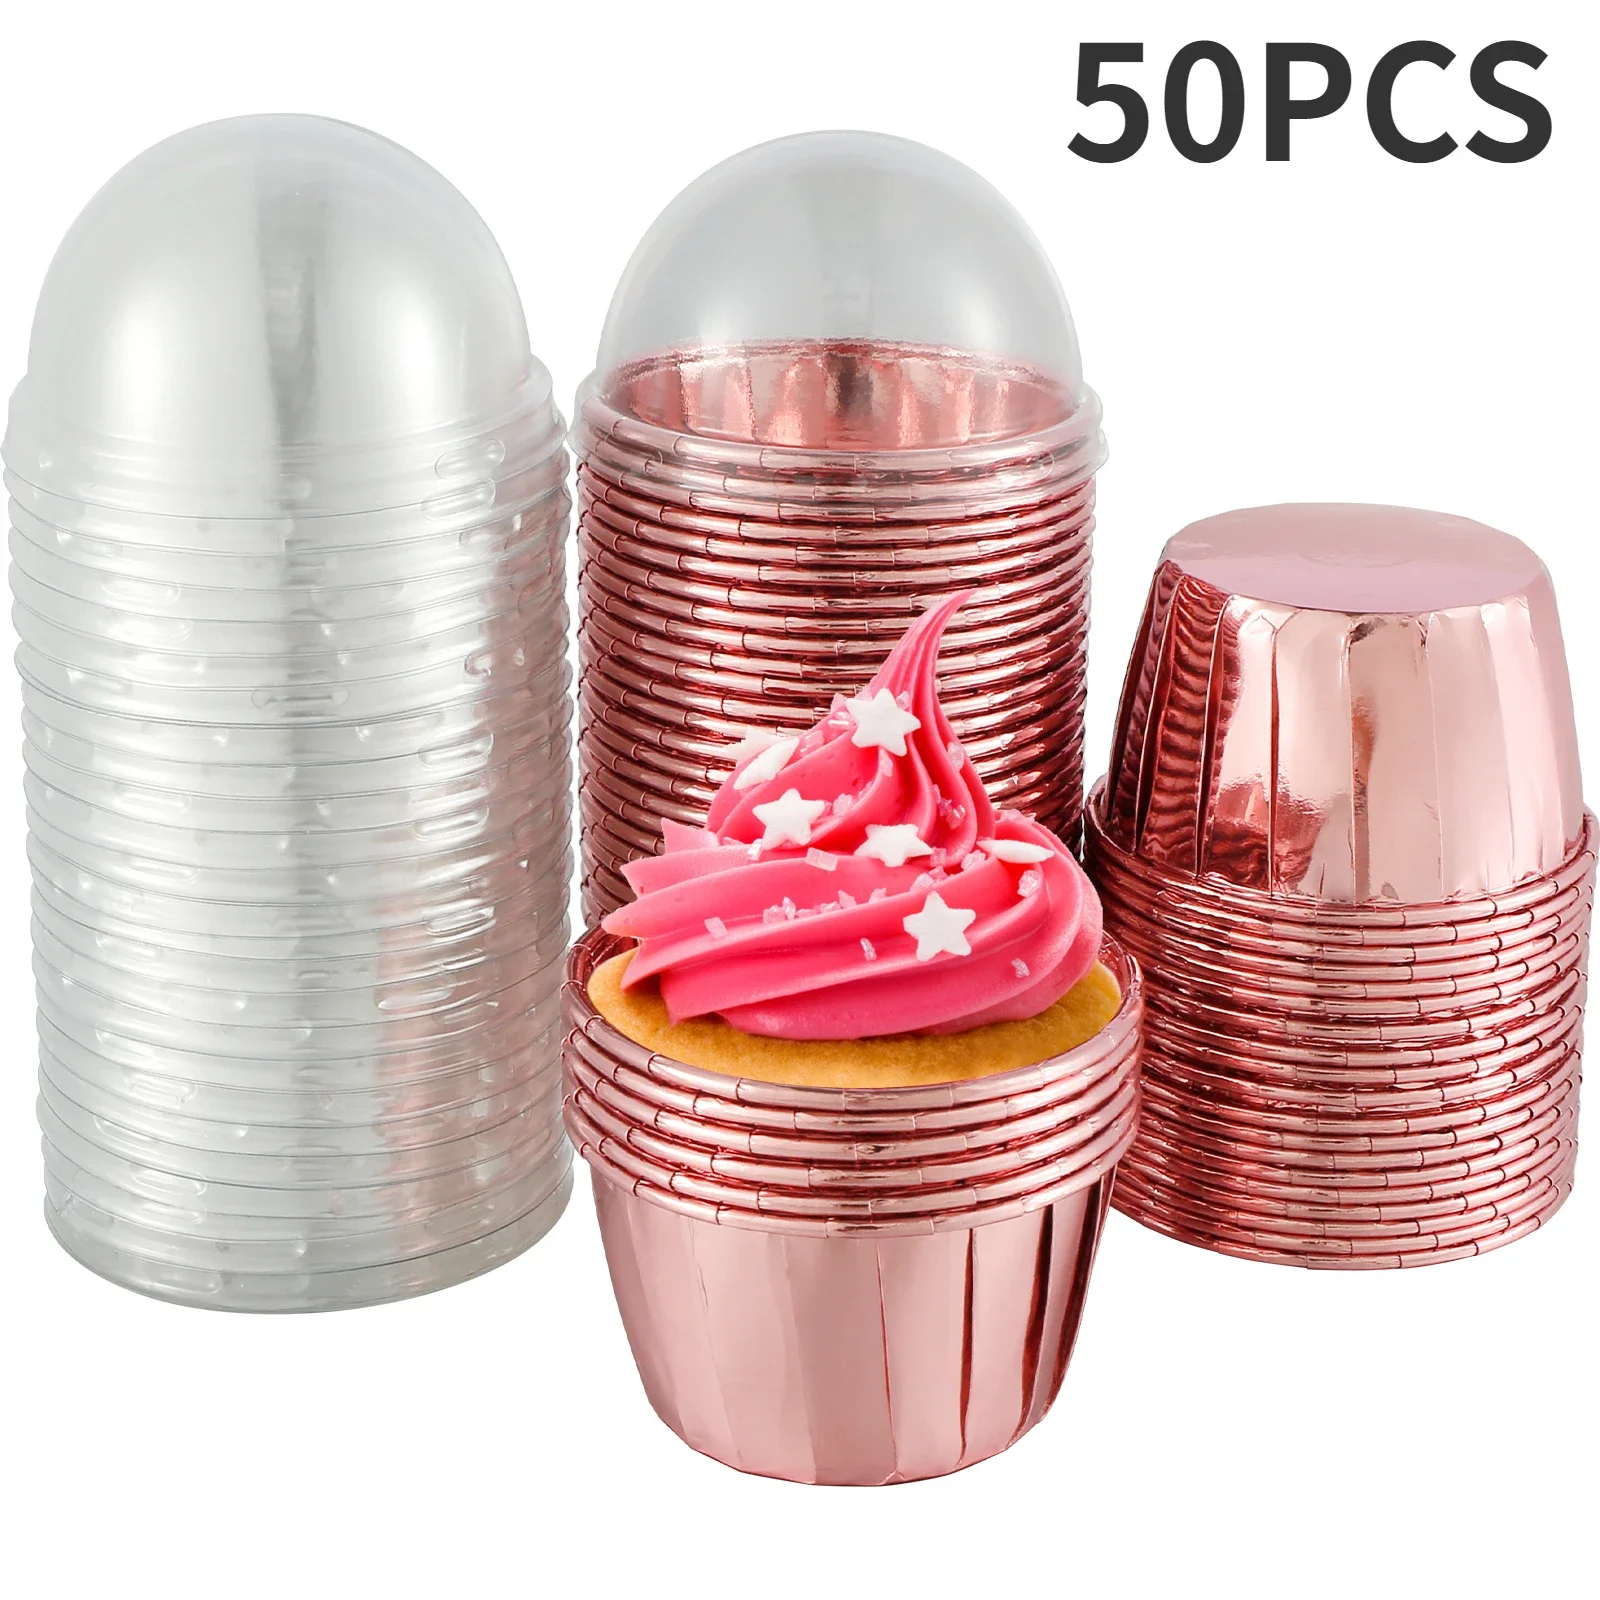 50pcs Aluminum Foil Cupcake Liners Muffin Paper Baking Cups